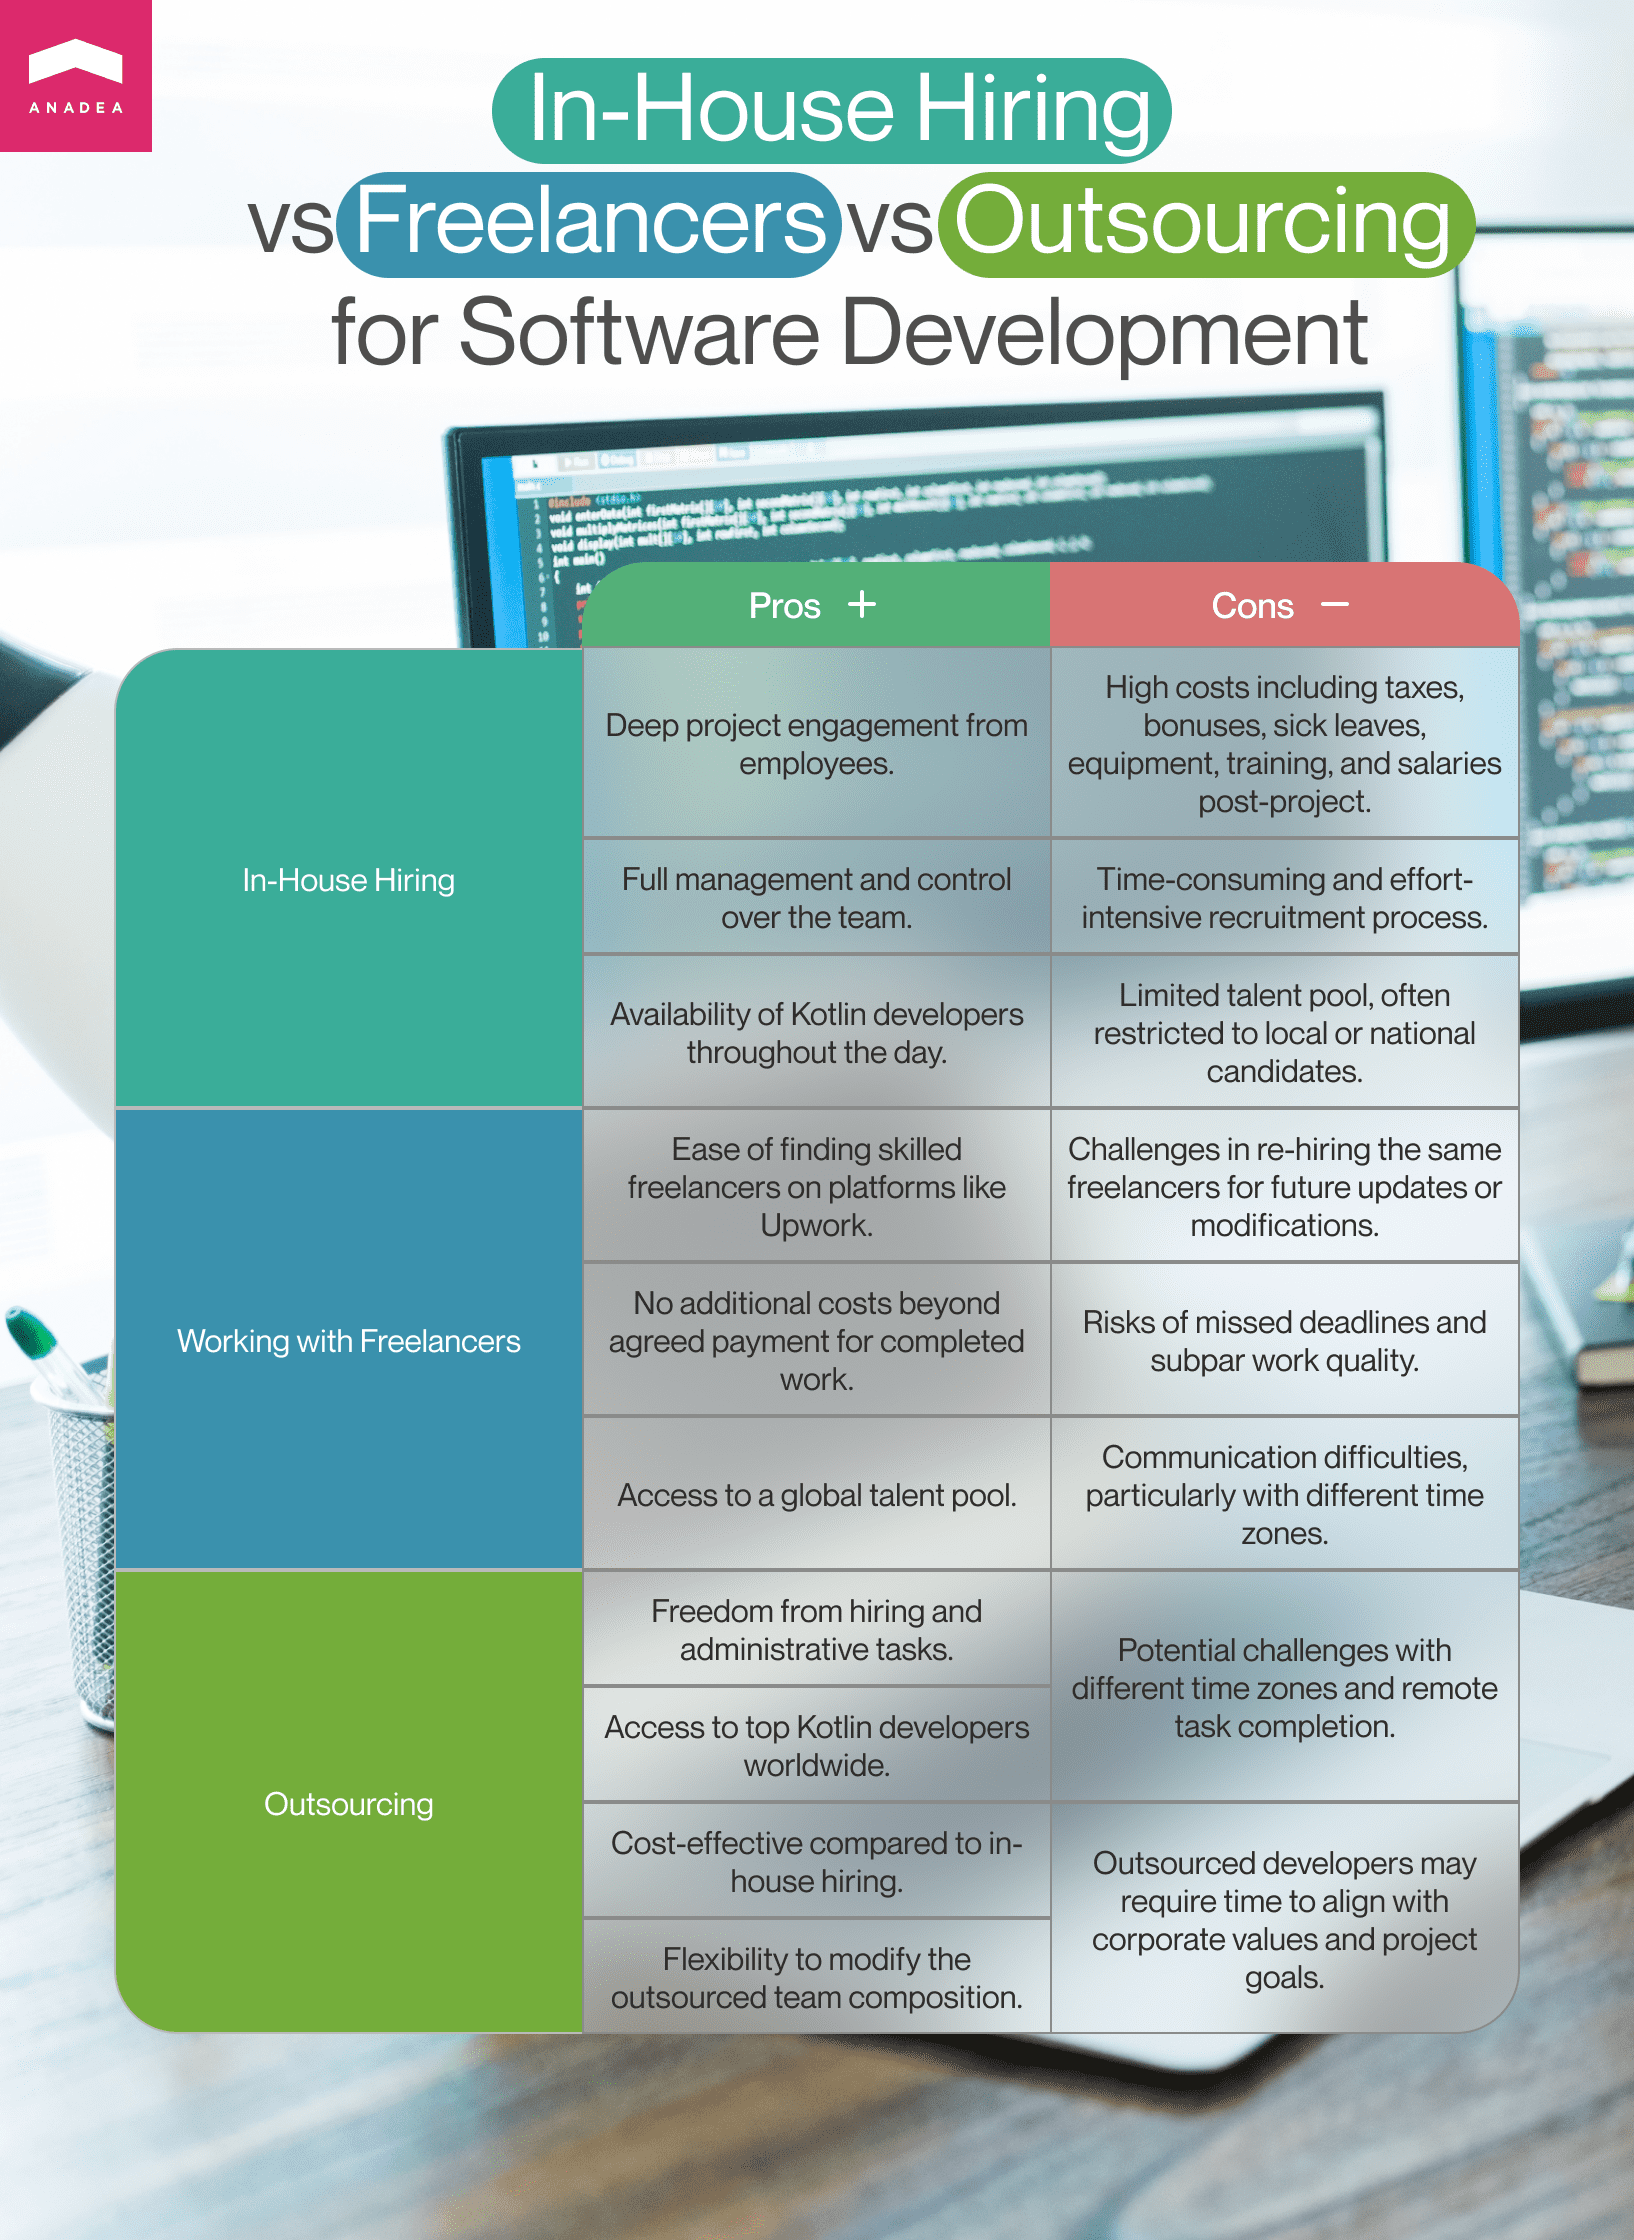 In-house hiring vs Freelancers vs Outsourcing for Custom Software Development